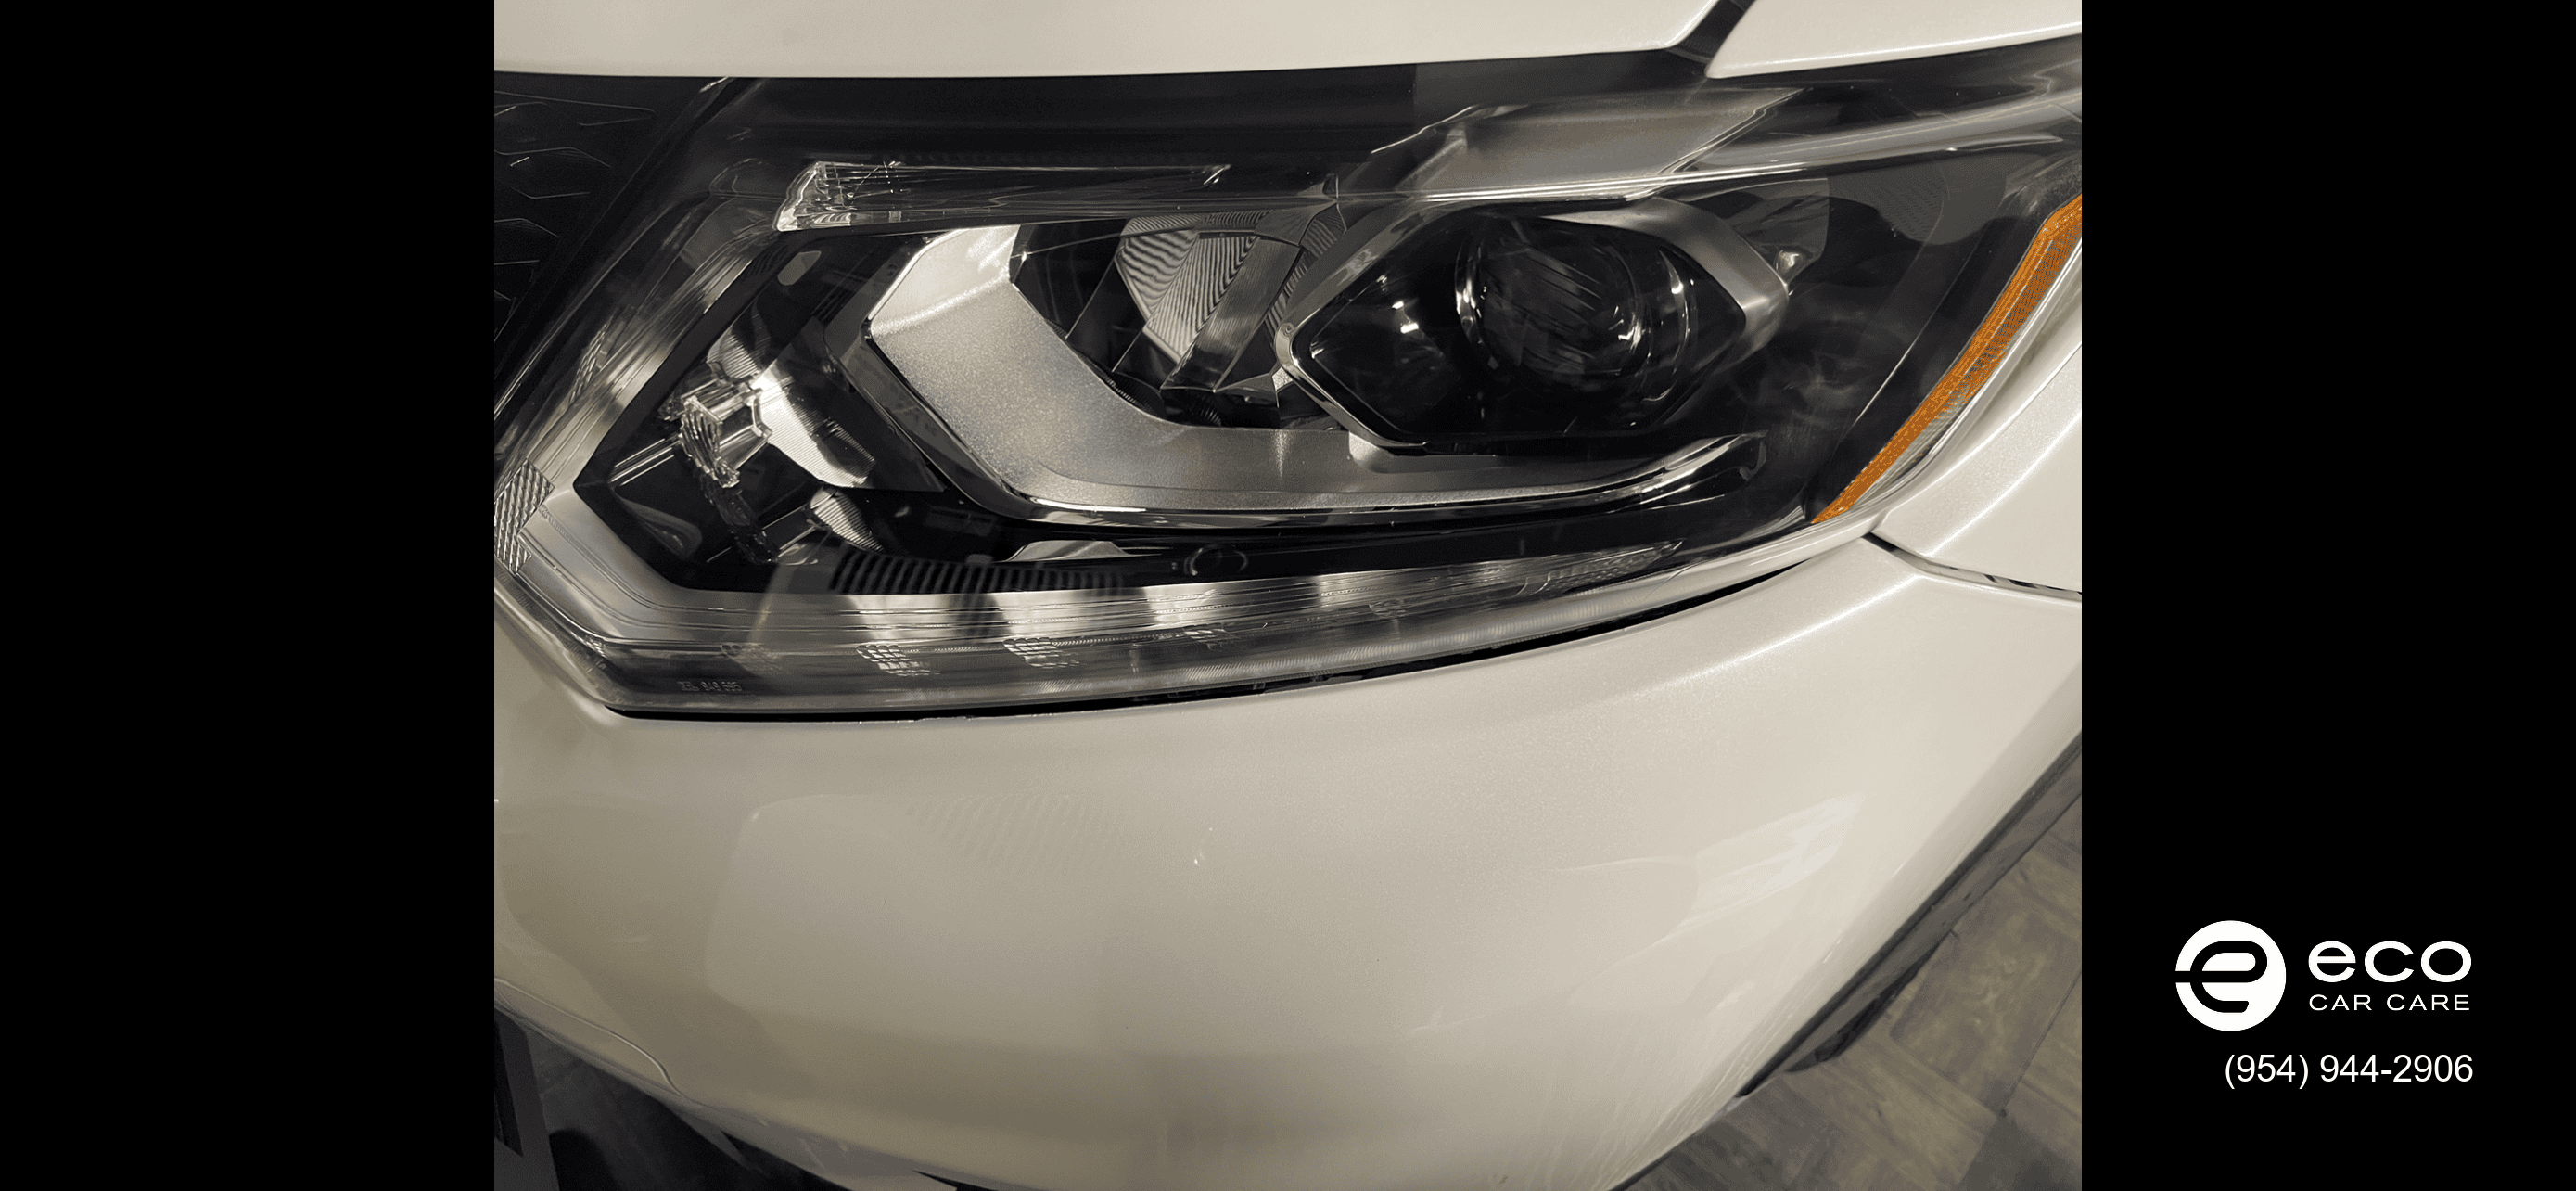 peeling headlight correction and restoration paint protection film